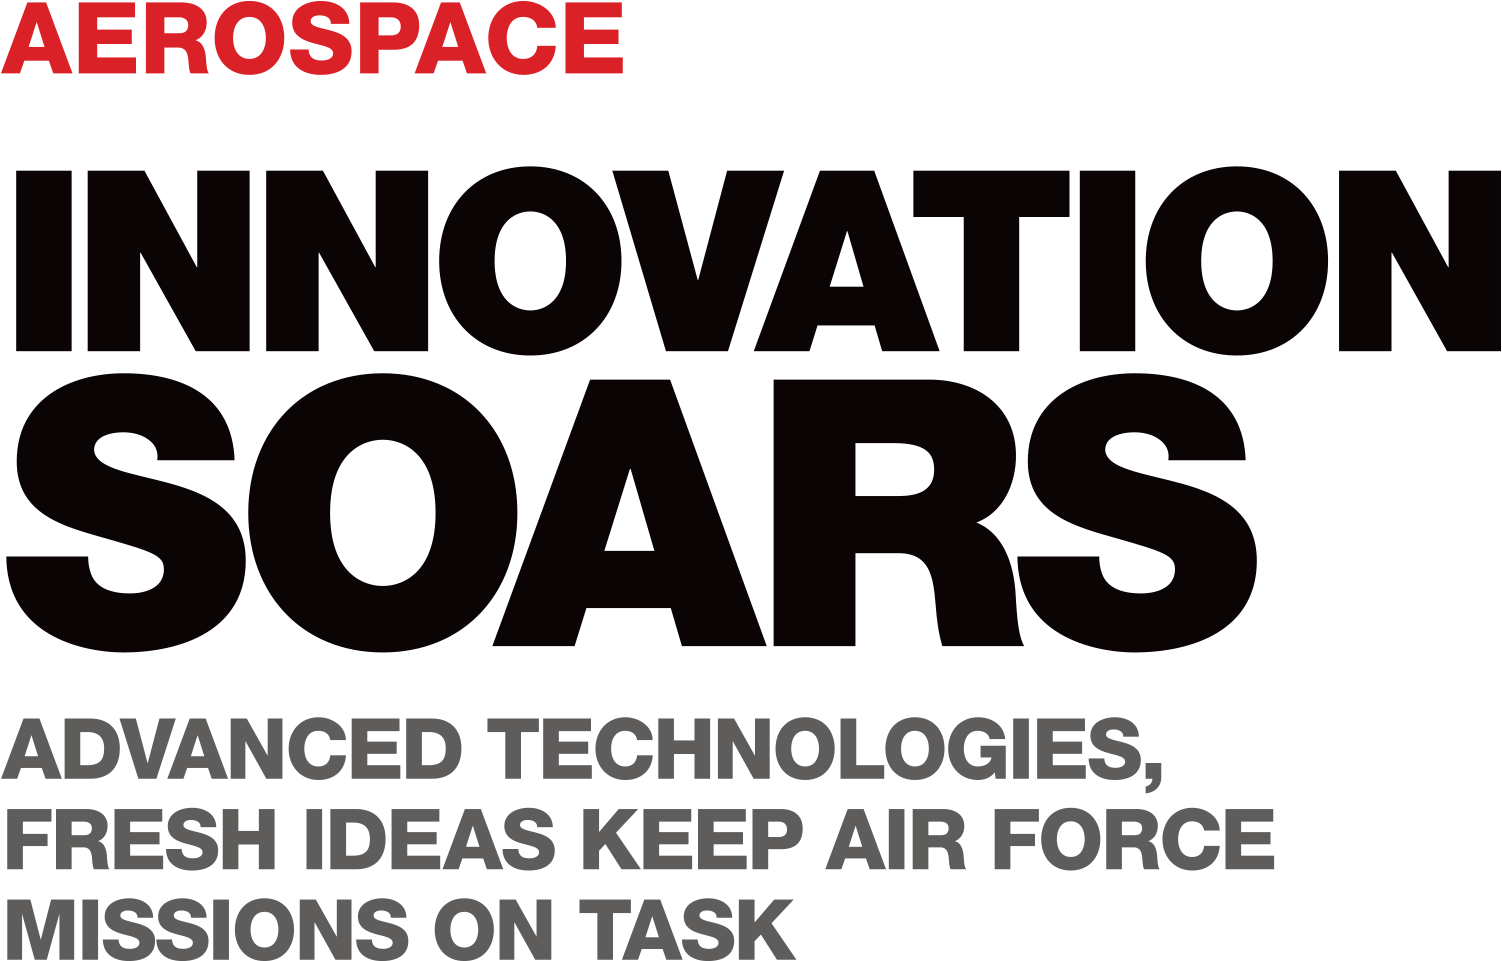 Advanced technologies, fresh ideas keep air force missions on task